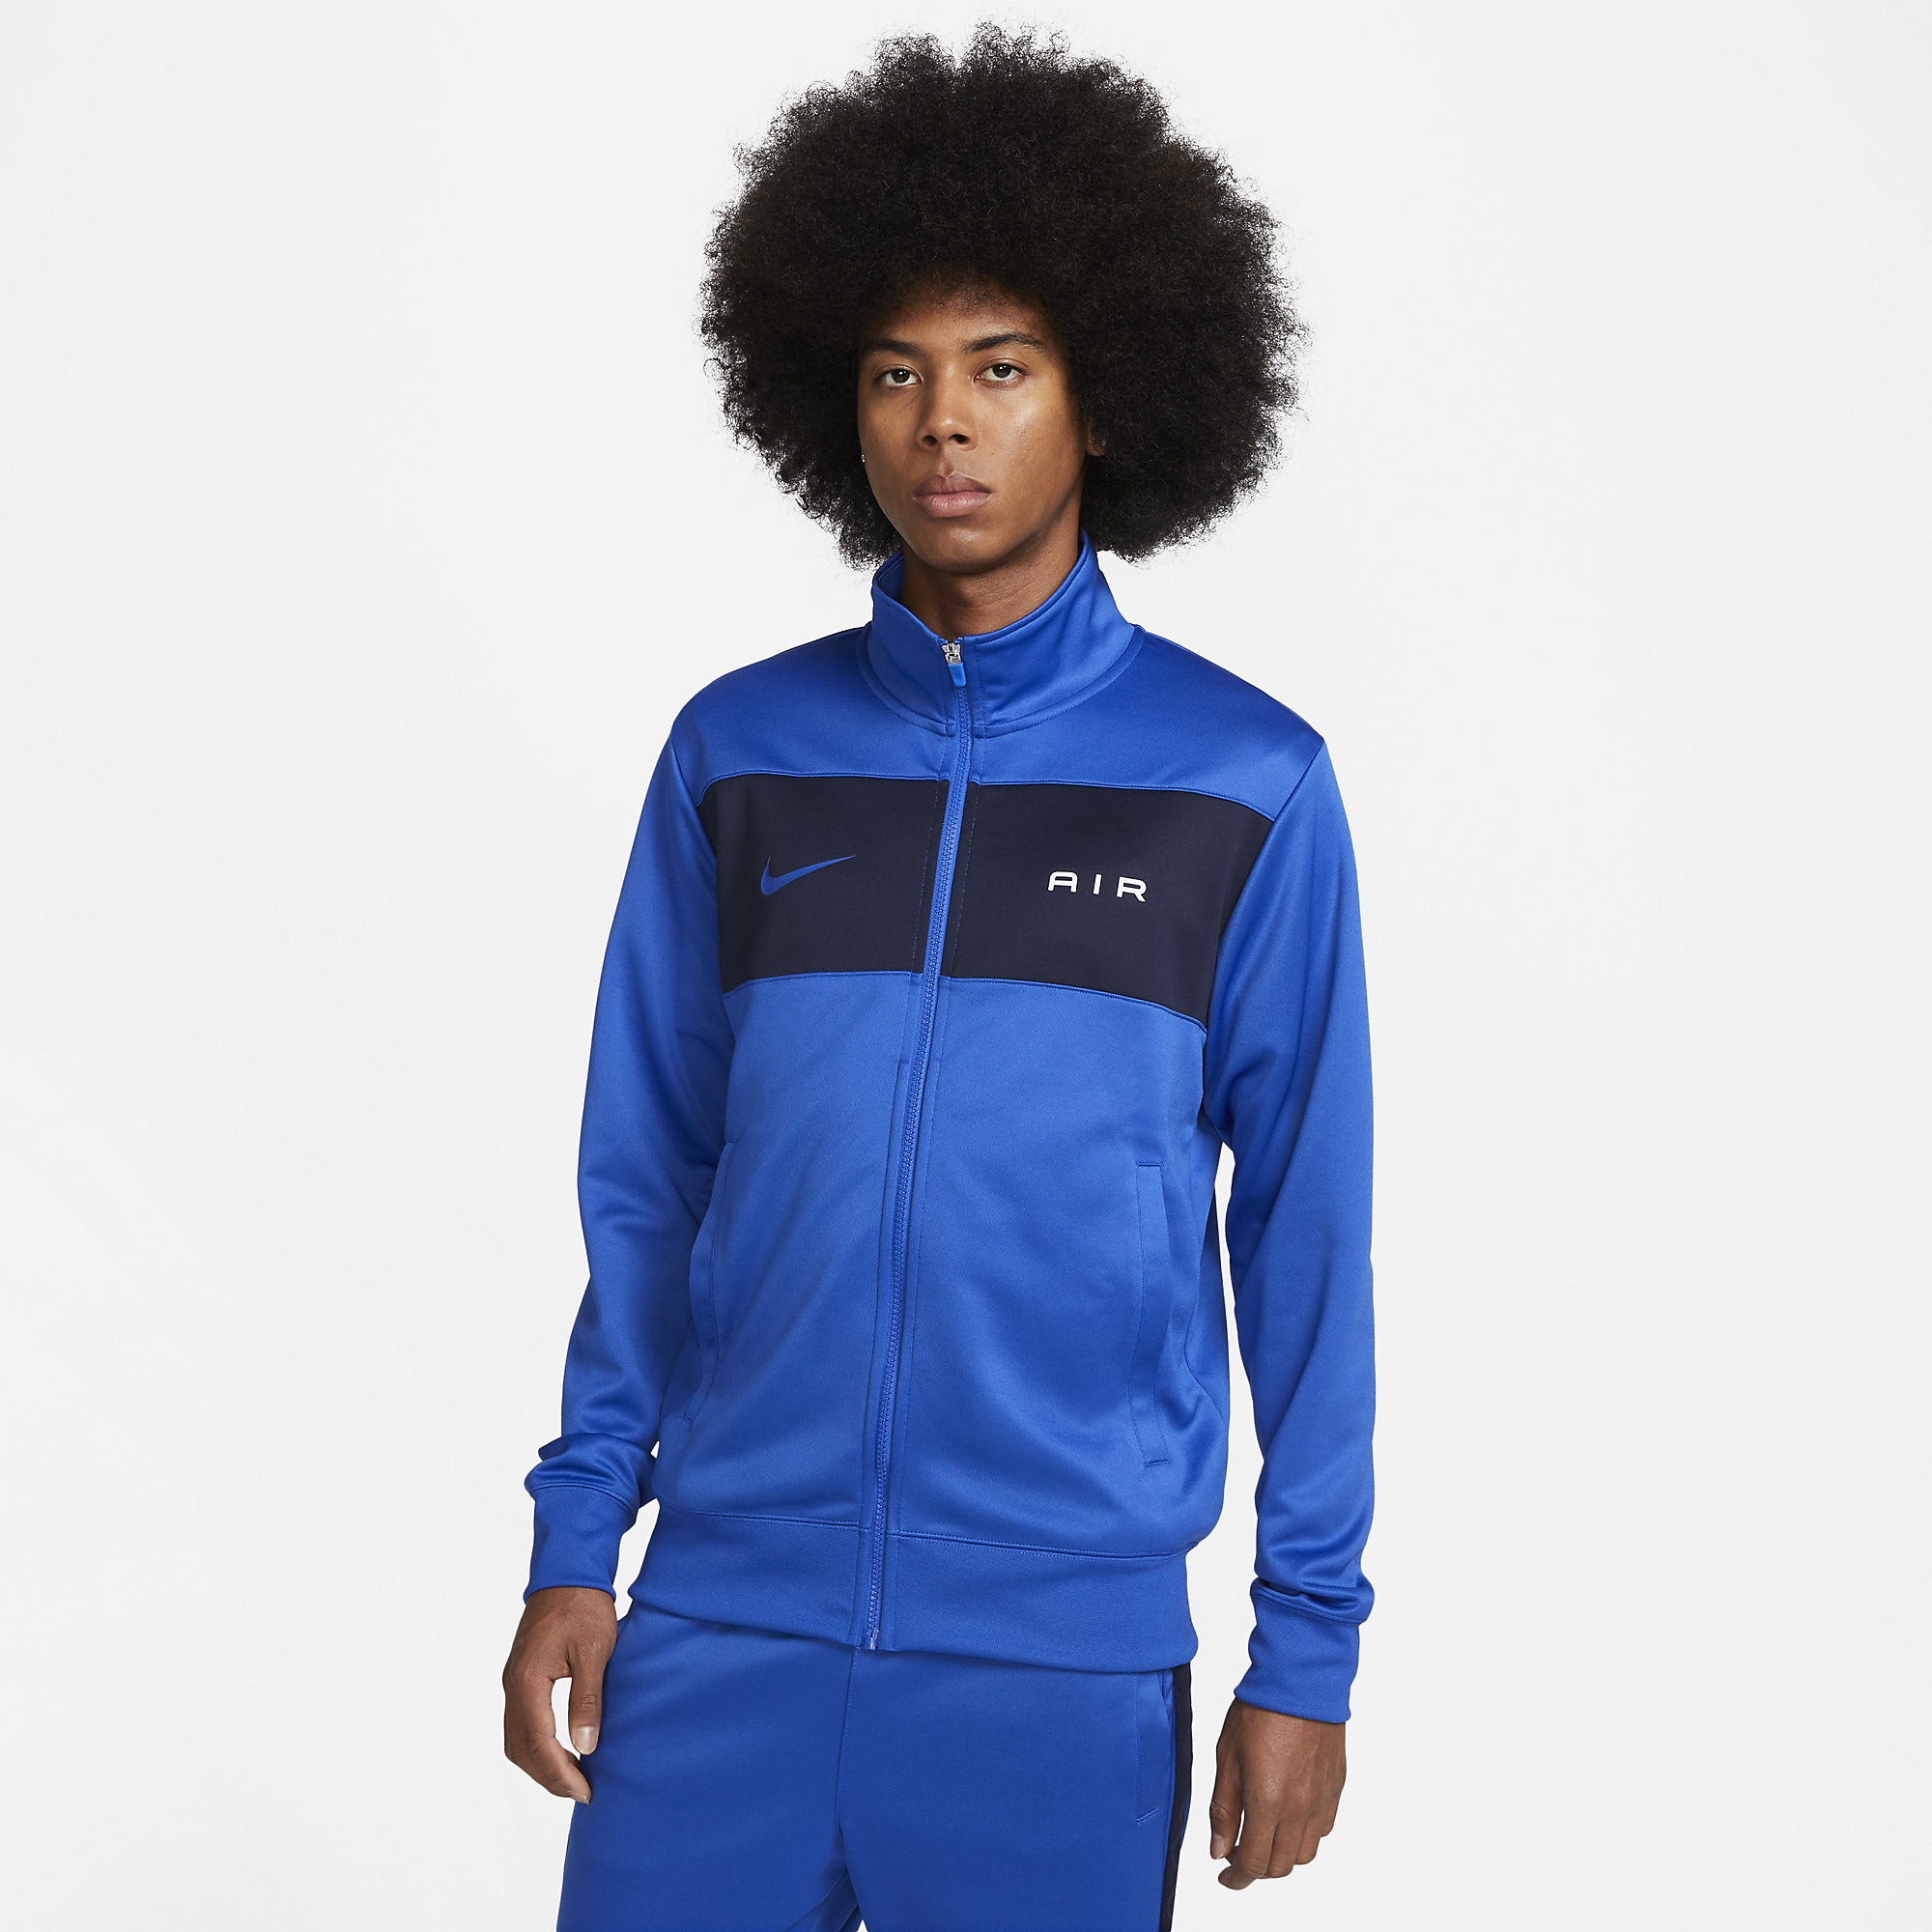 Nike Men's Tracksuit Jacket Air - Mens Clothing | Pro:Direct Soccer